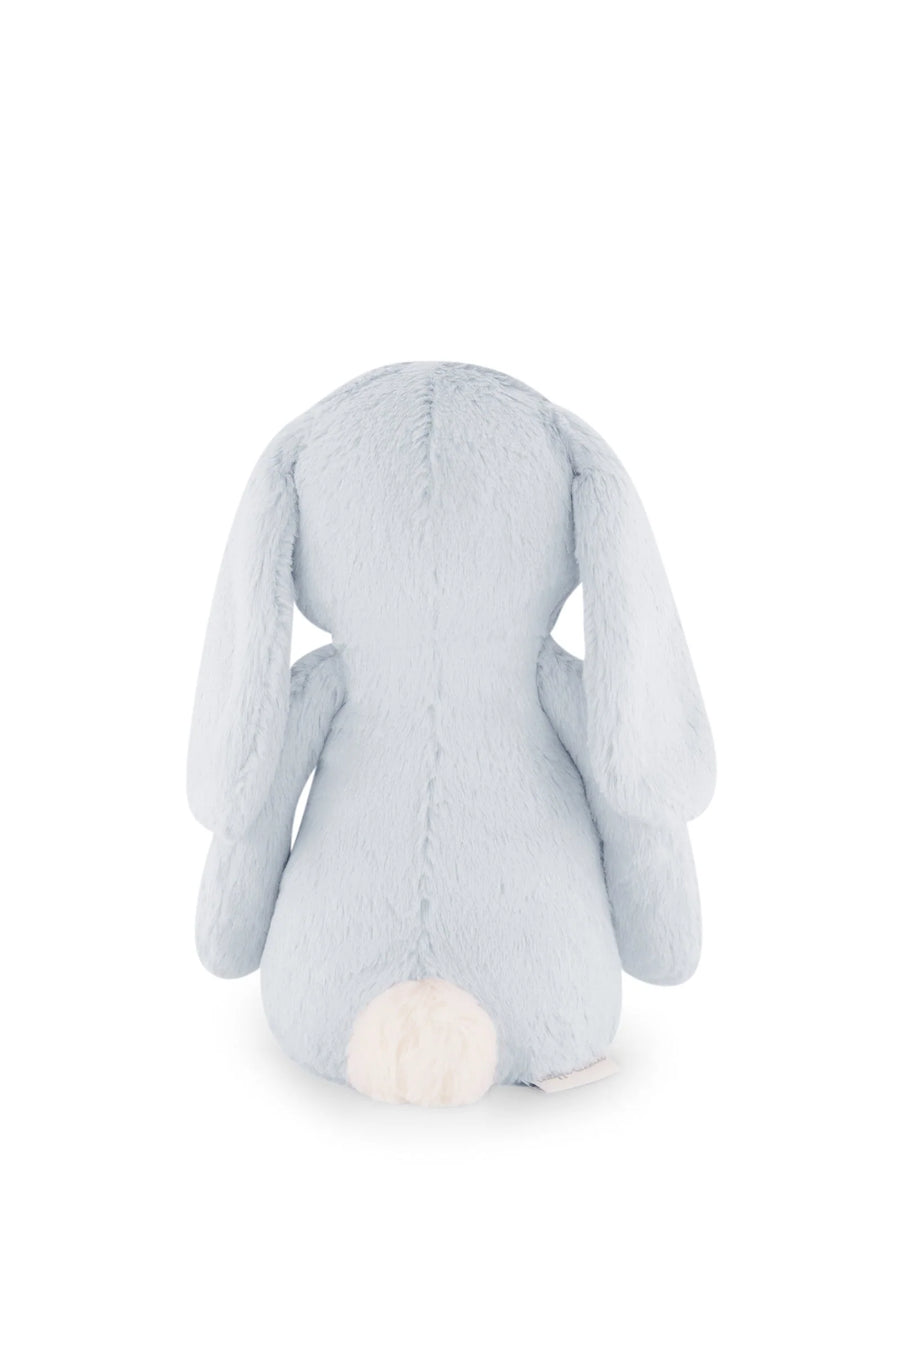 Snuggle Bunny - Penelope - Droplet - 20cm